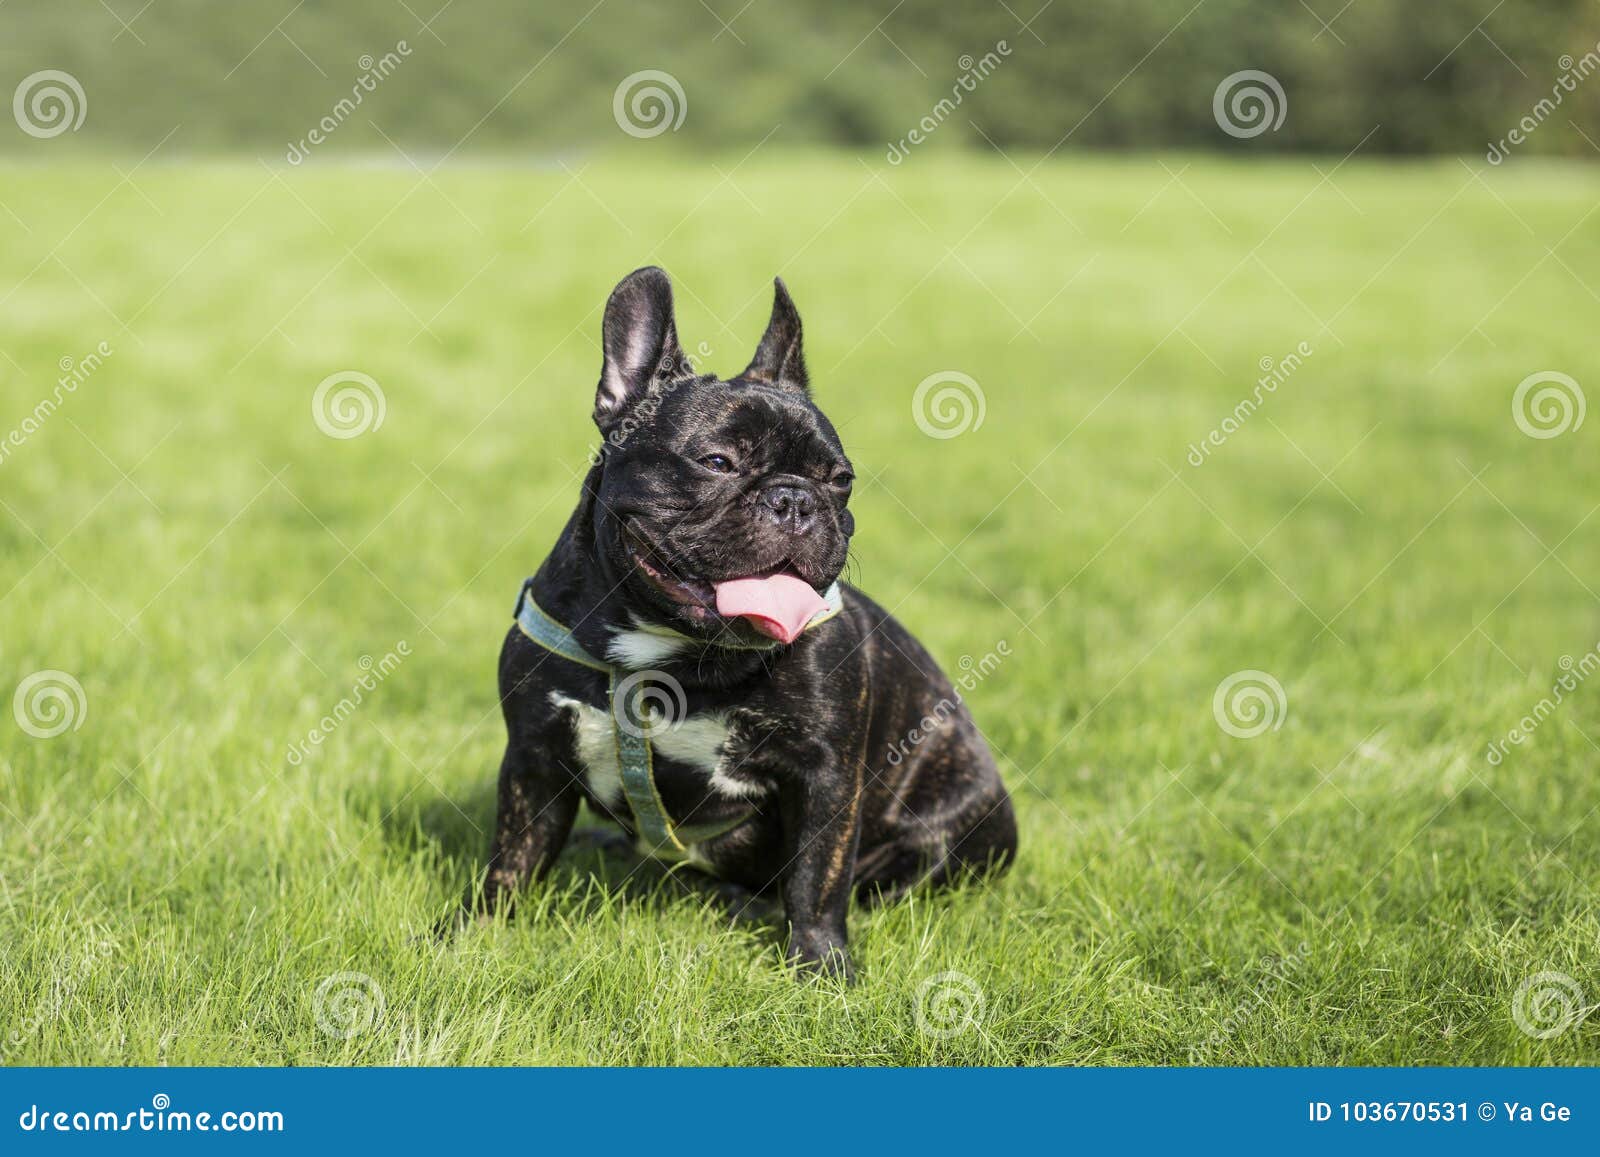 Black French Bulldog stock image. Image of bucket, animal - 103670531